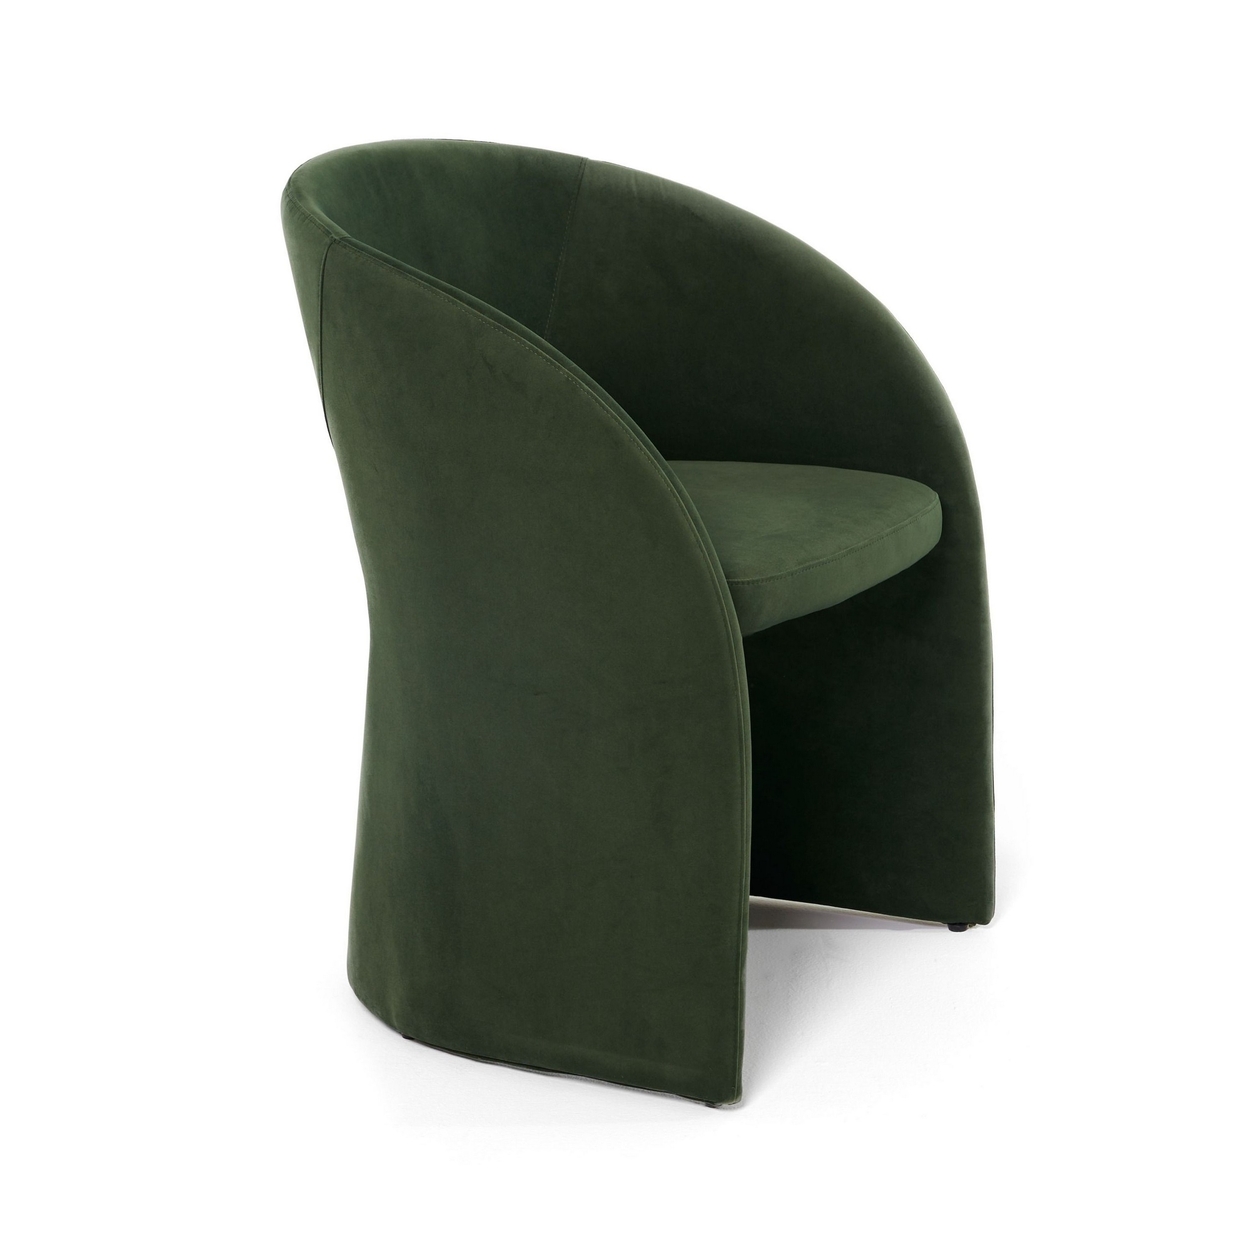 24 Inch Dining Chair, Green Fabric, Iron Frame, Curved Cutout Backrest- Saltoro Sherpi